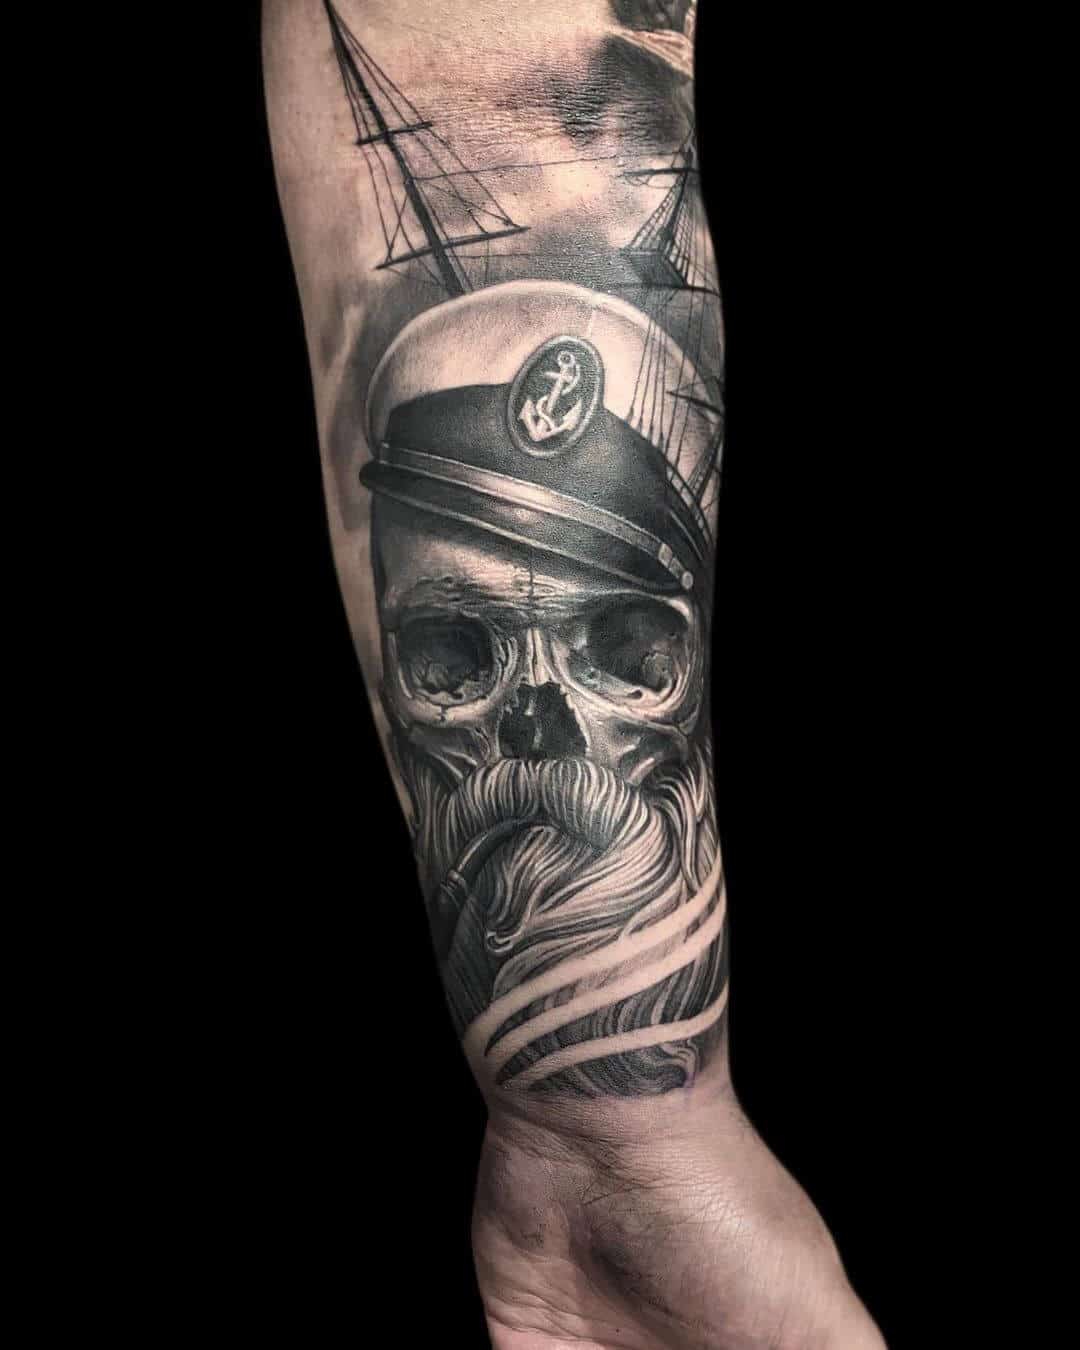 Jimi May | Sydney Based Professional Tattoo Artist